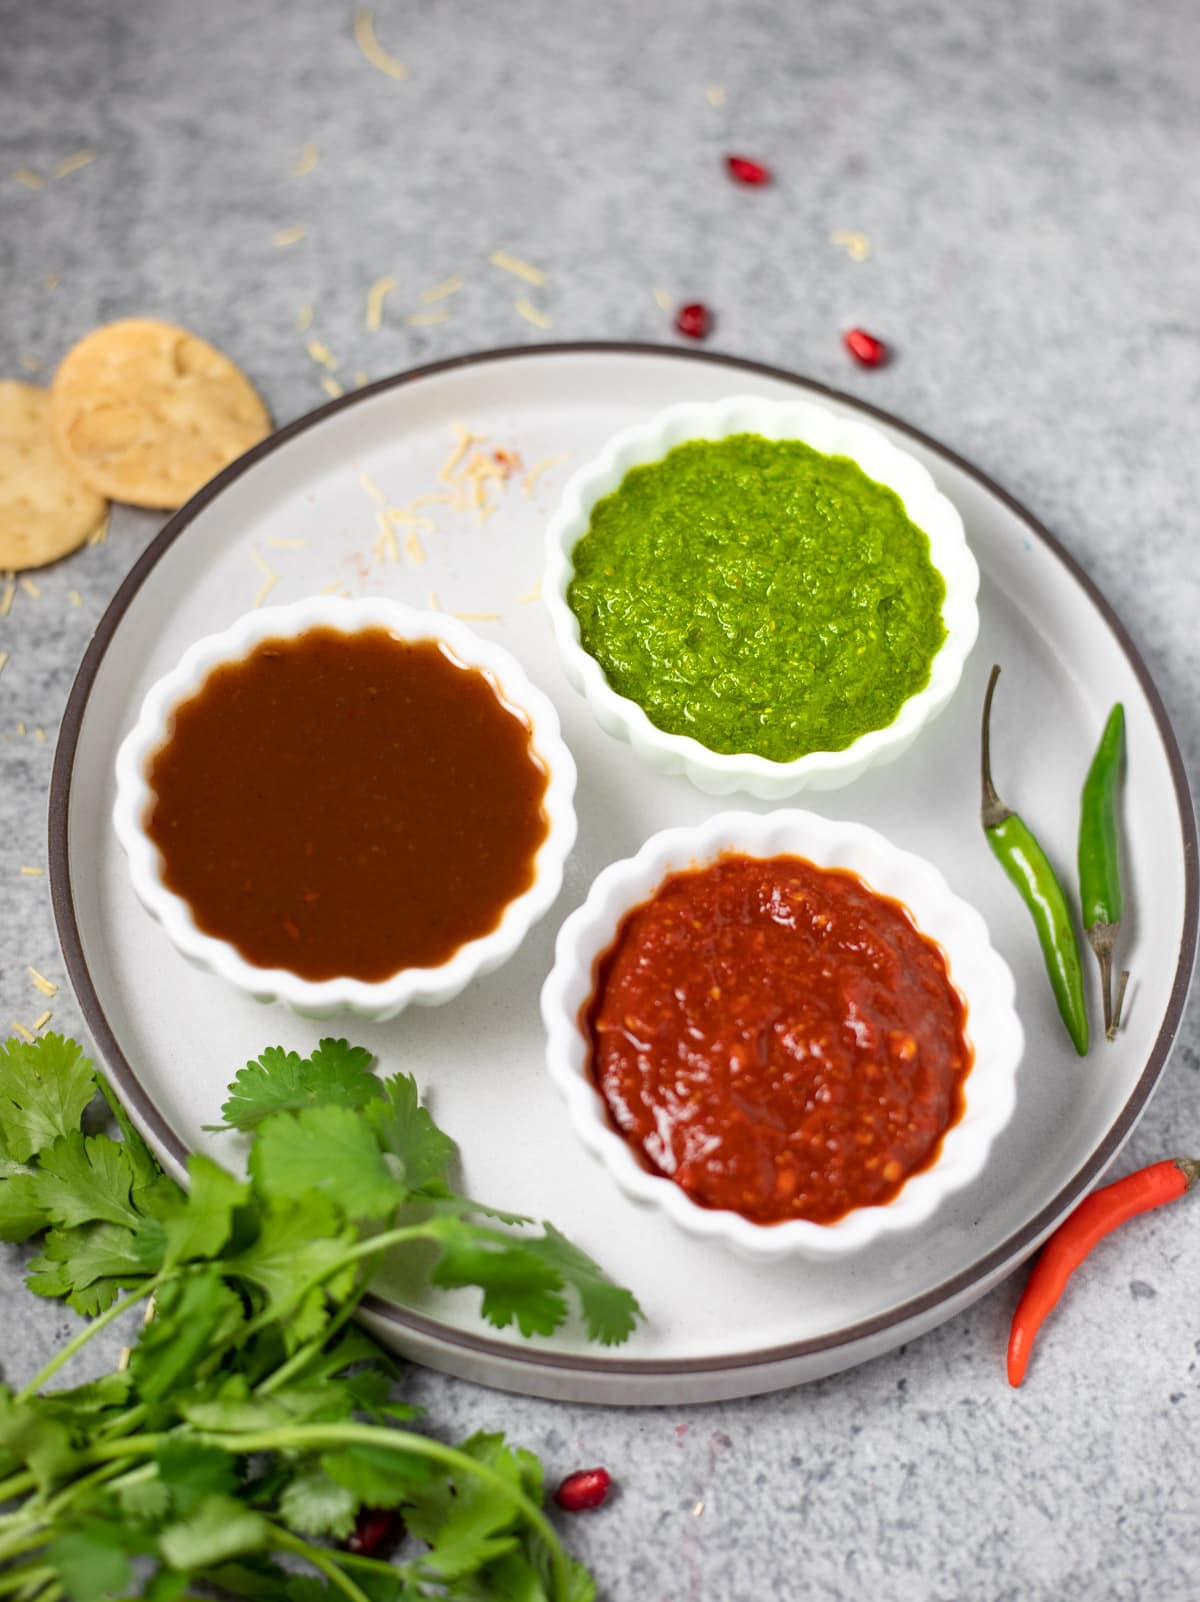 3 Indian dipping sauces in small bowls - green chutney, tamarind chutney, red chili garlic chutney